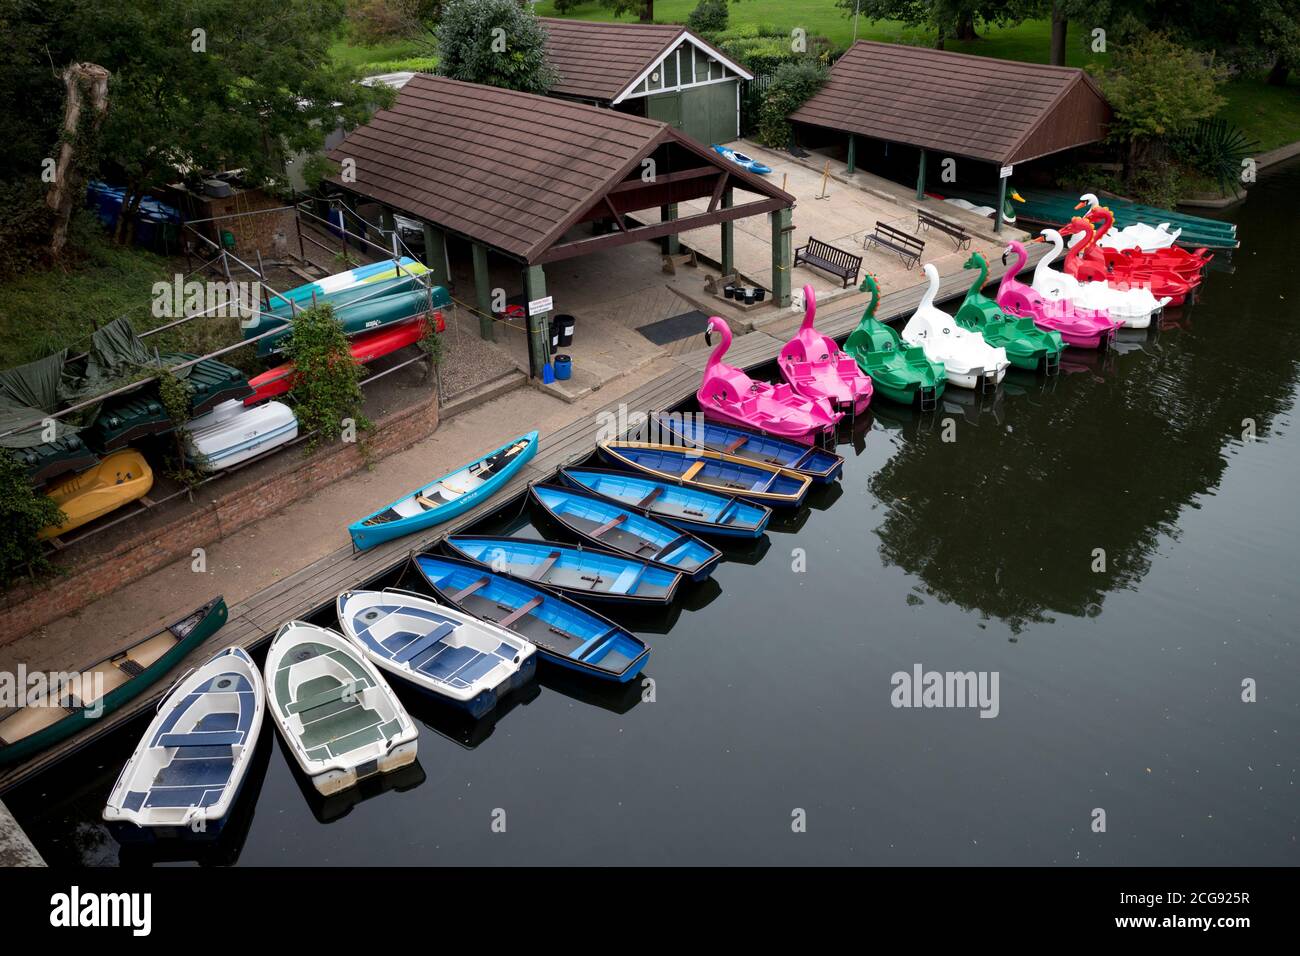 Hire boats at St. Nicholas Park, Warwick, Warwickshire, England, UK Stock Photo